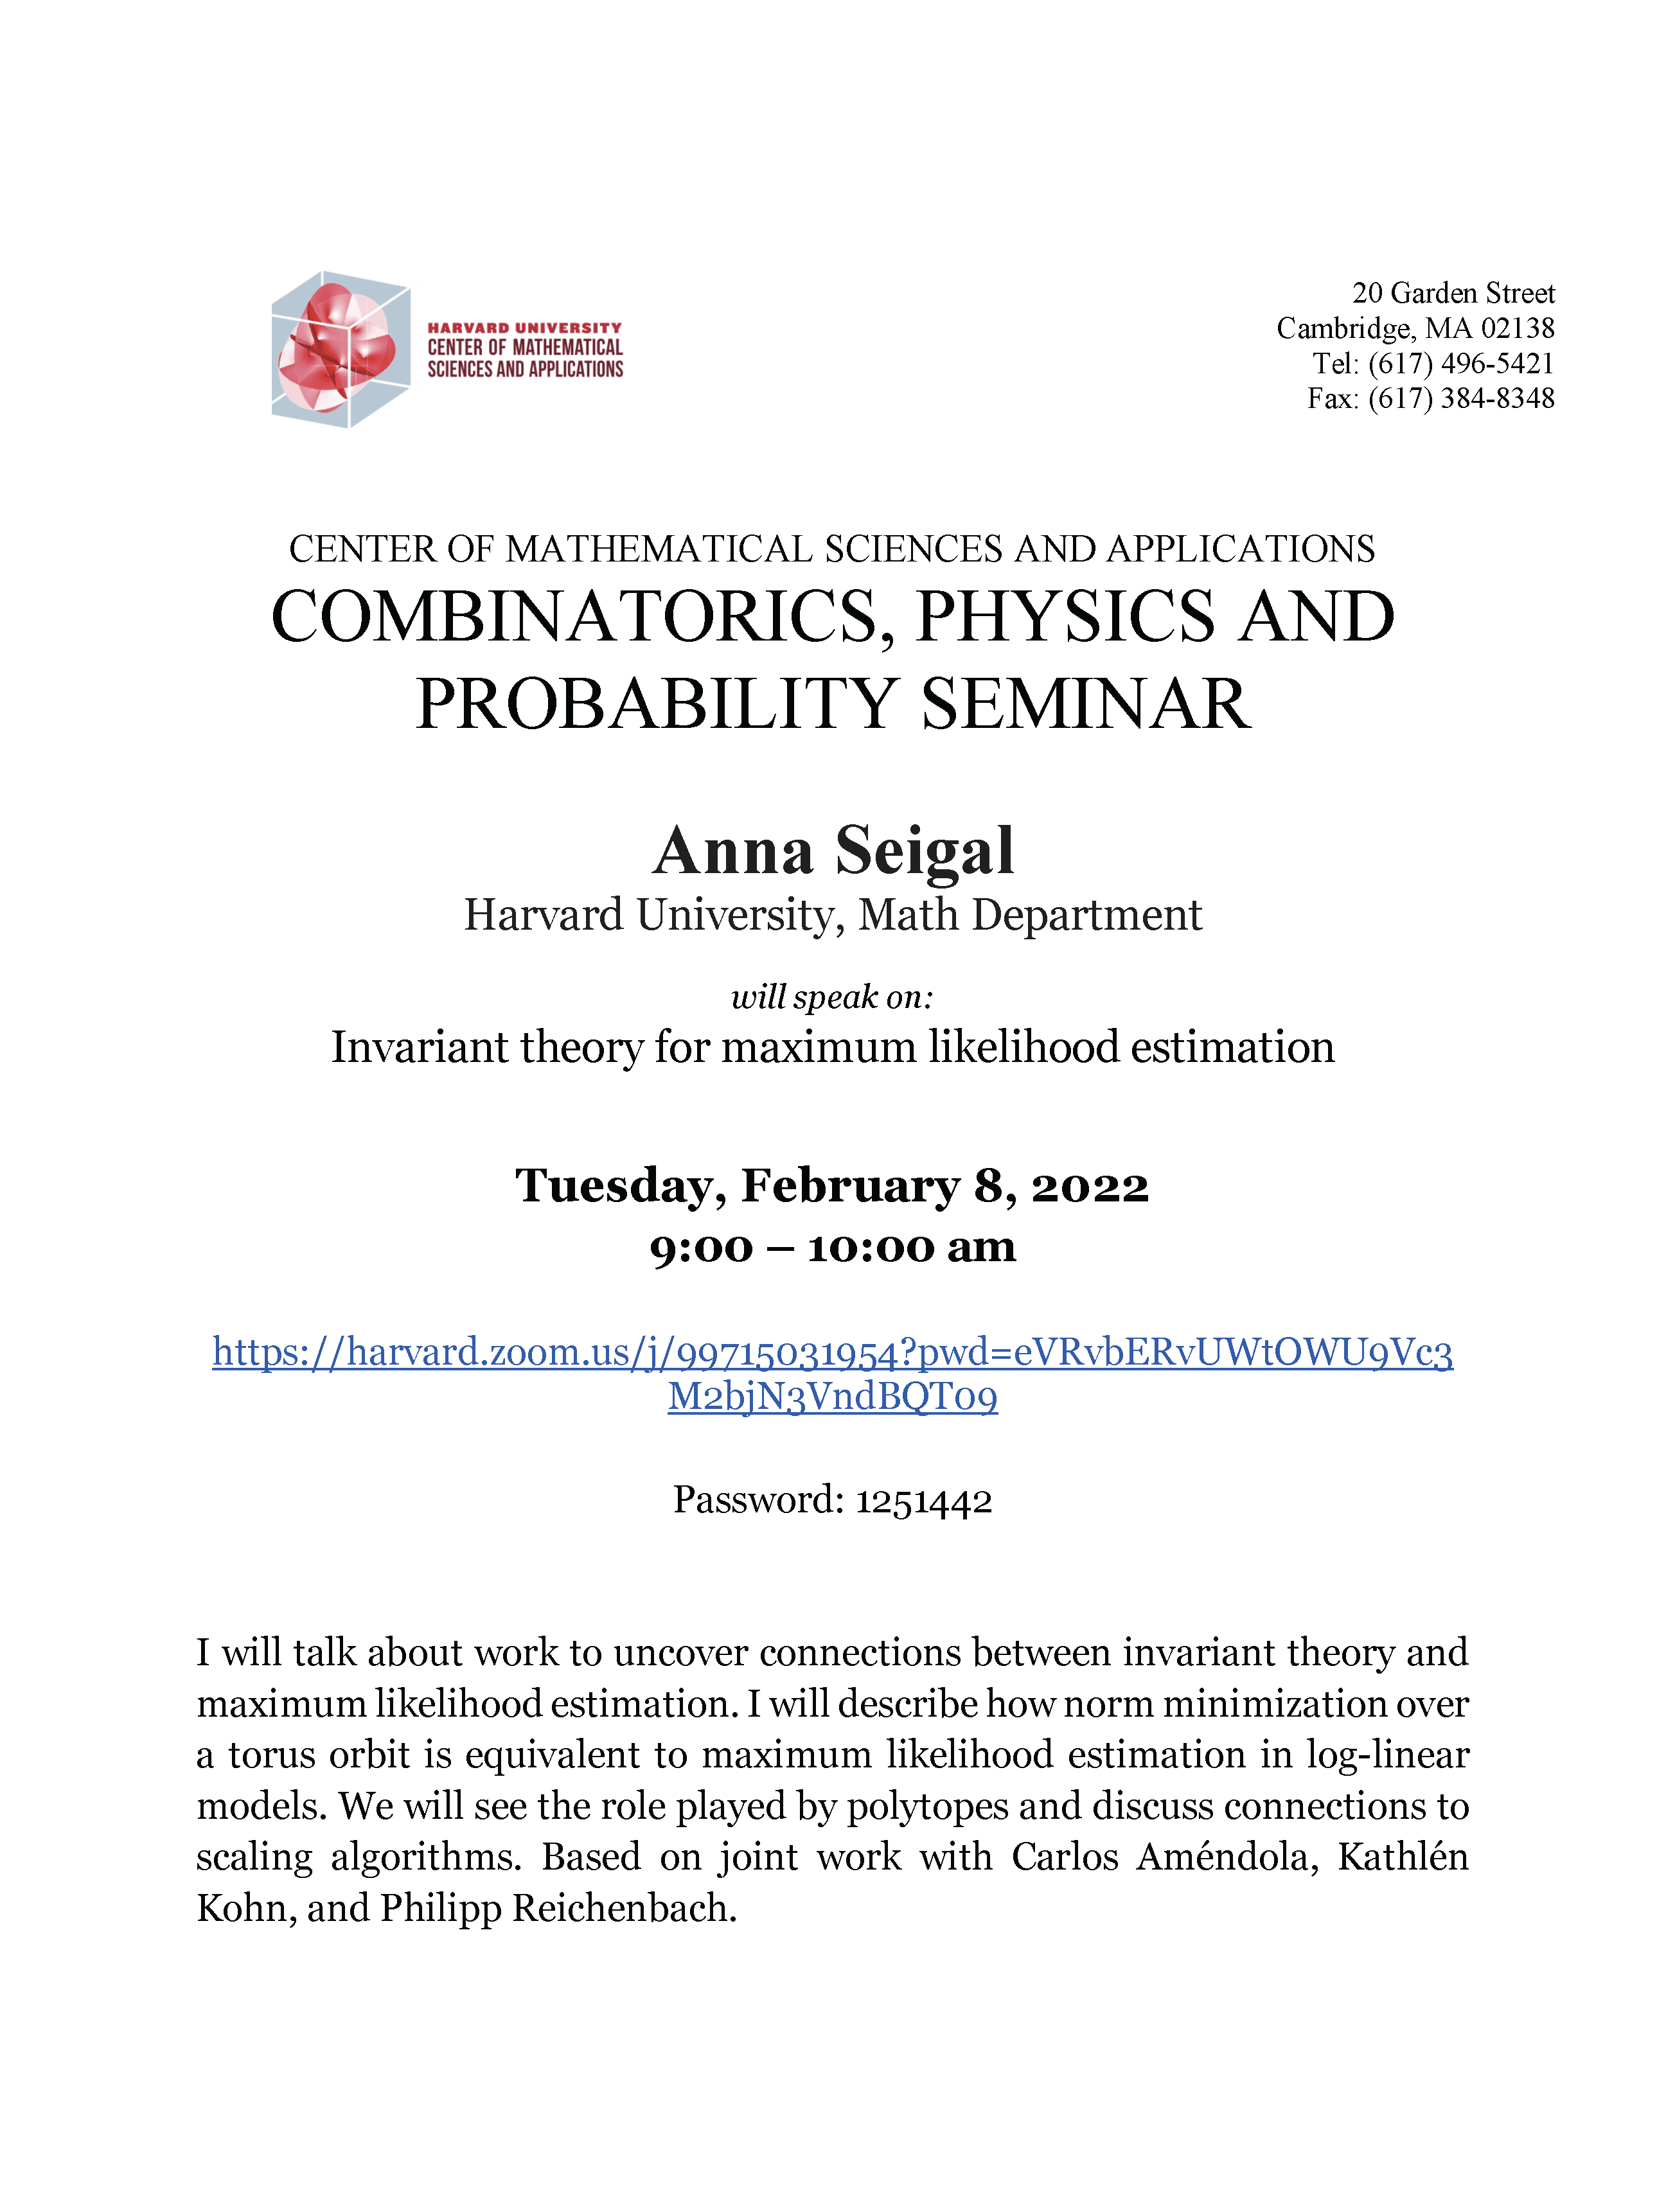 CMSA-Combinatorics-Physics-and-Probability-Seminar-2.8.2022